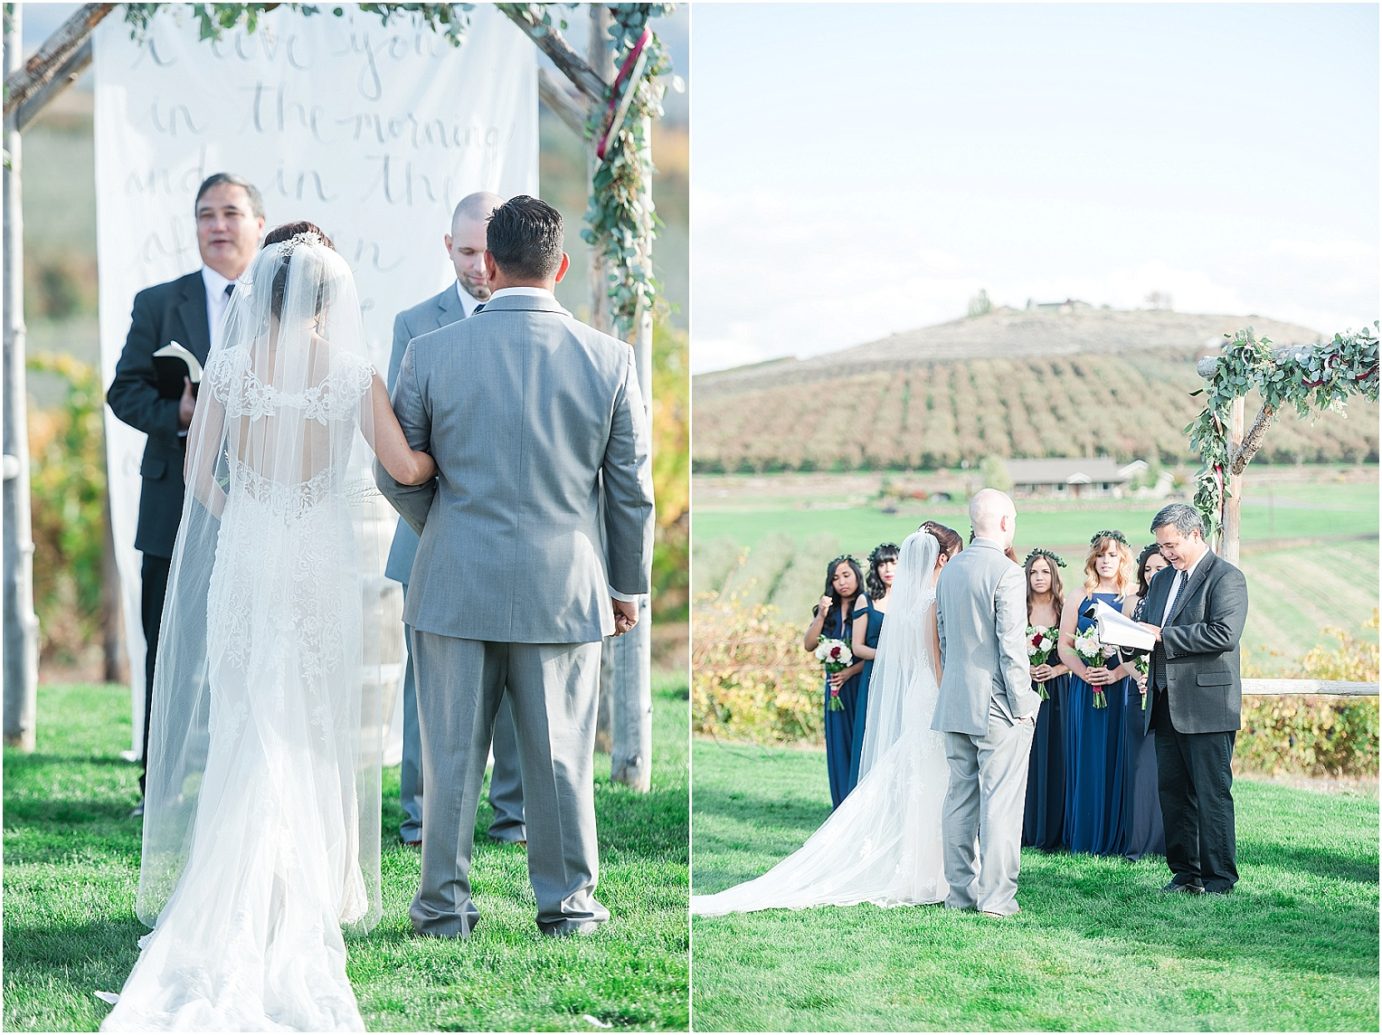 Fontaine Estates Winery Wedding Ceremony photo